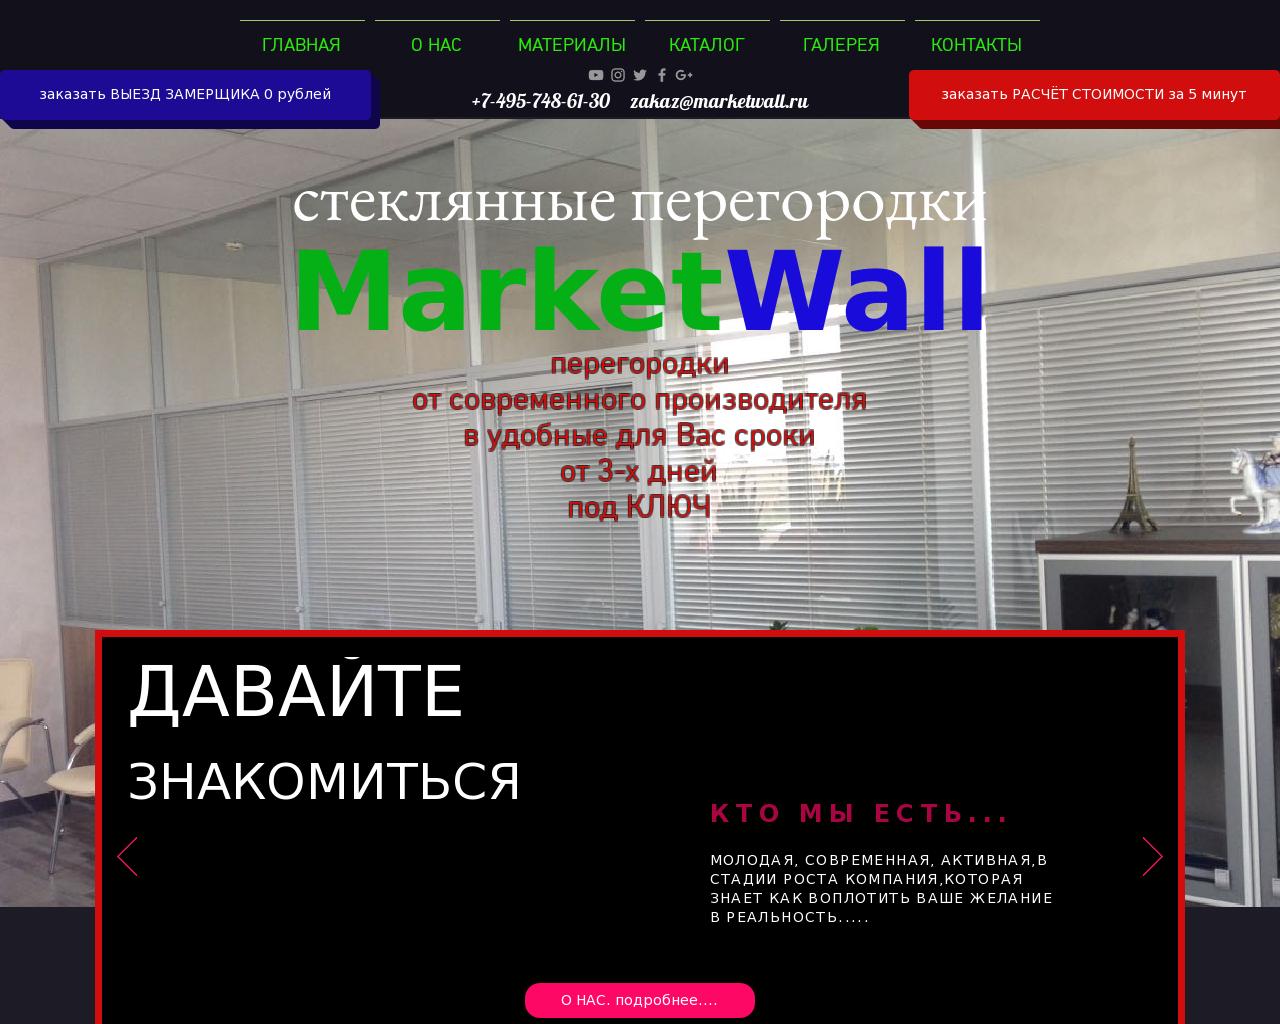 Изображение сайта marketwall.ru в разрешении 1280x1024